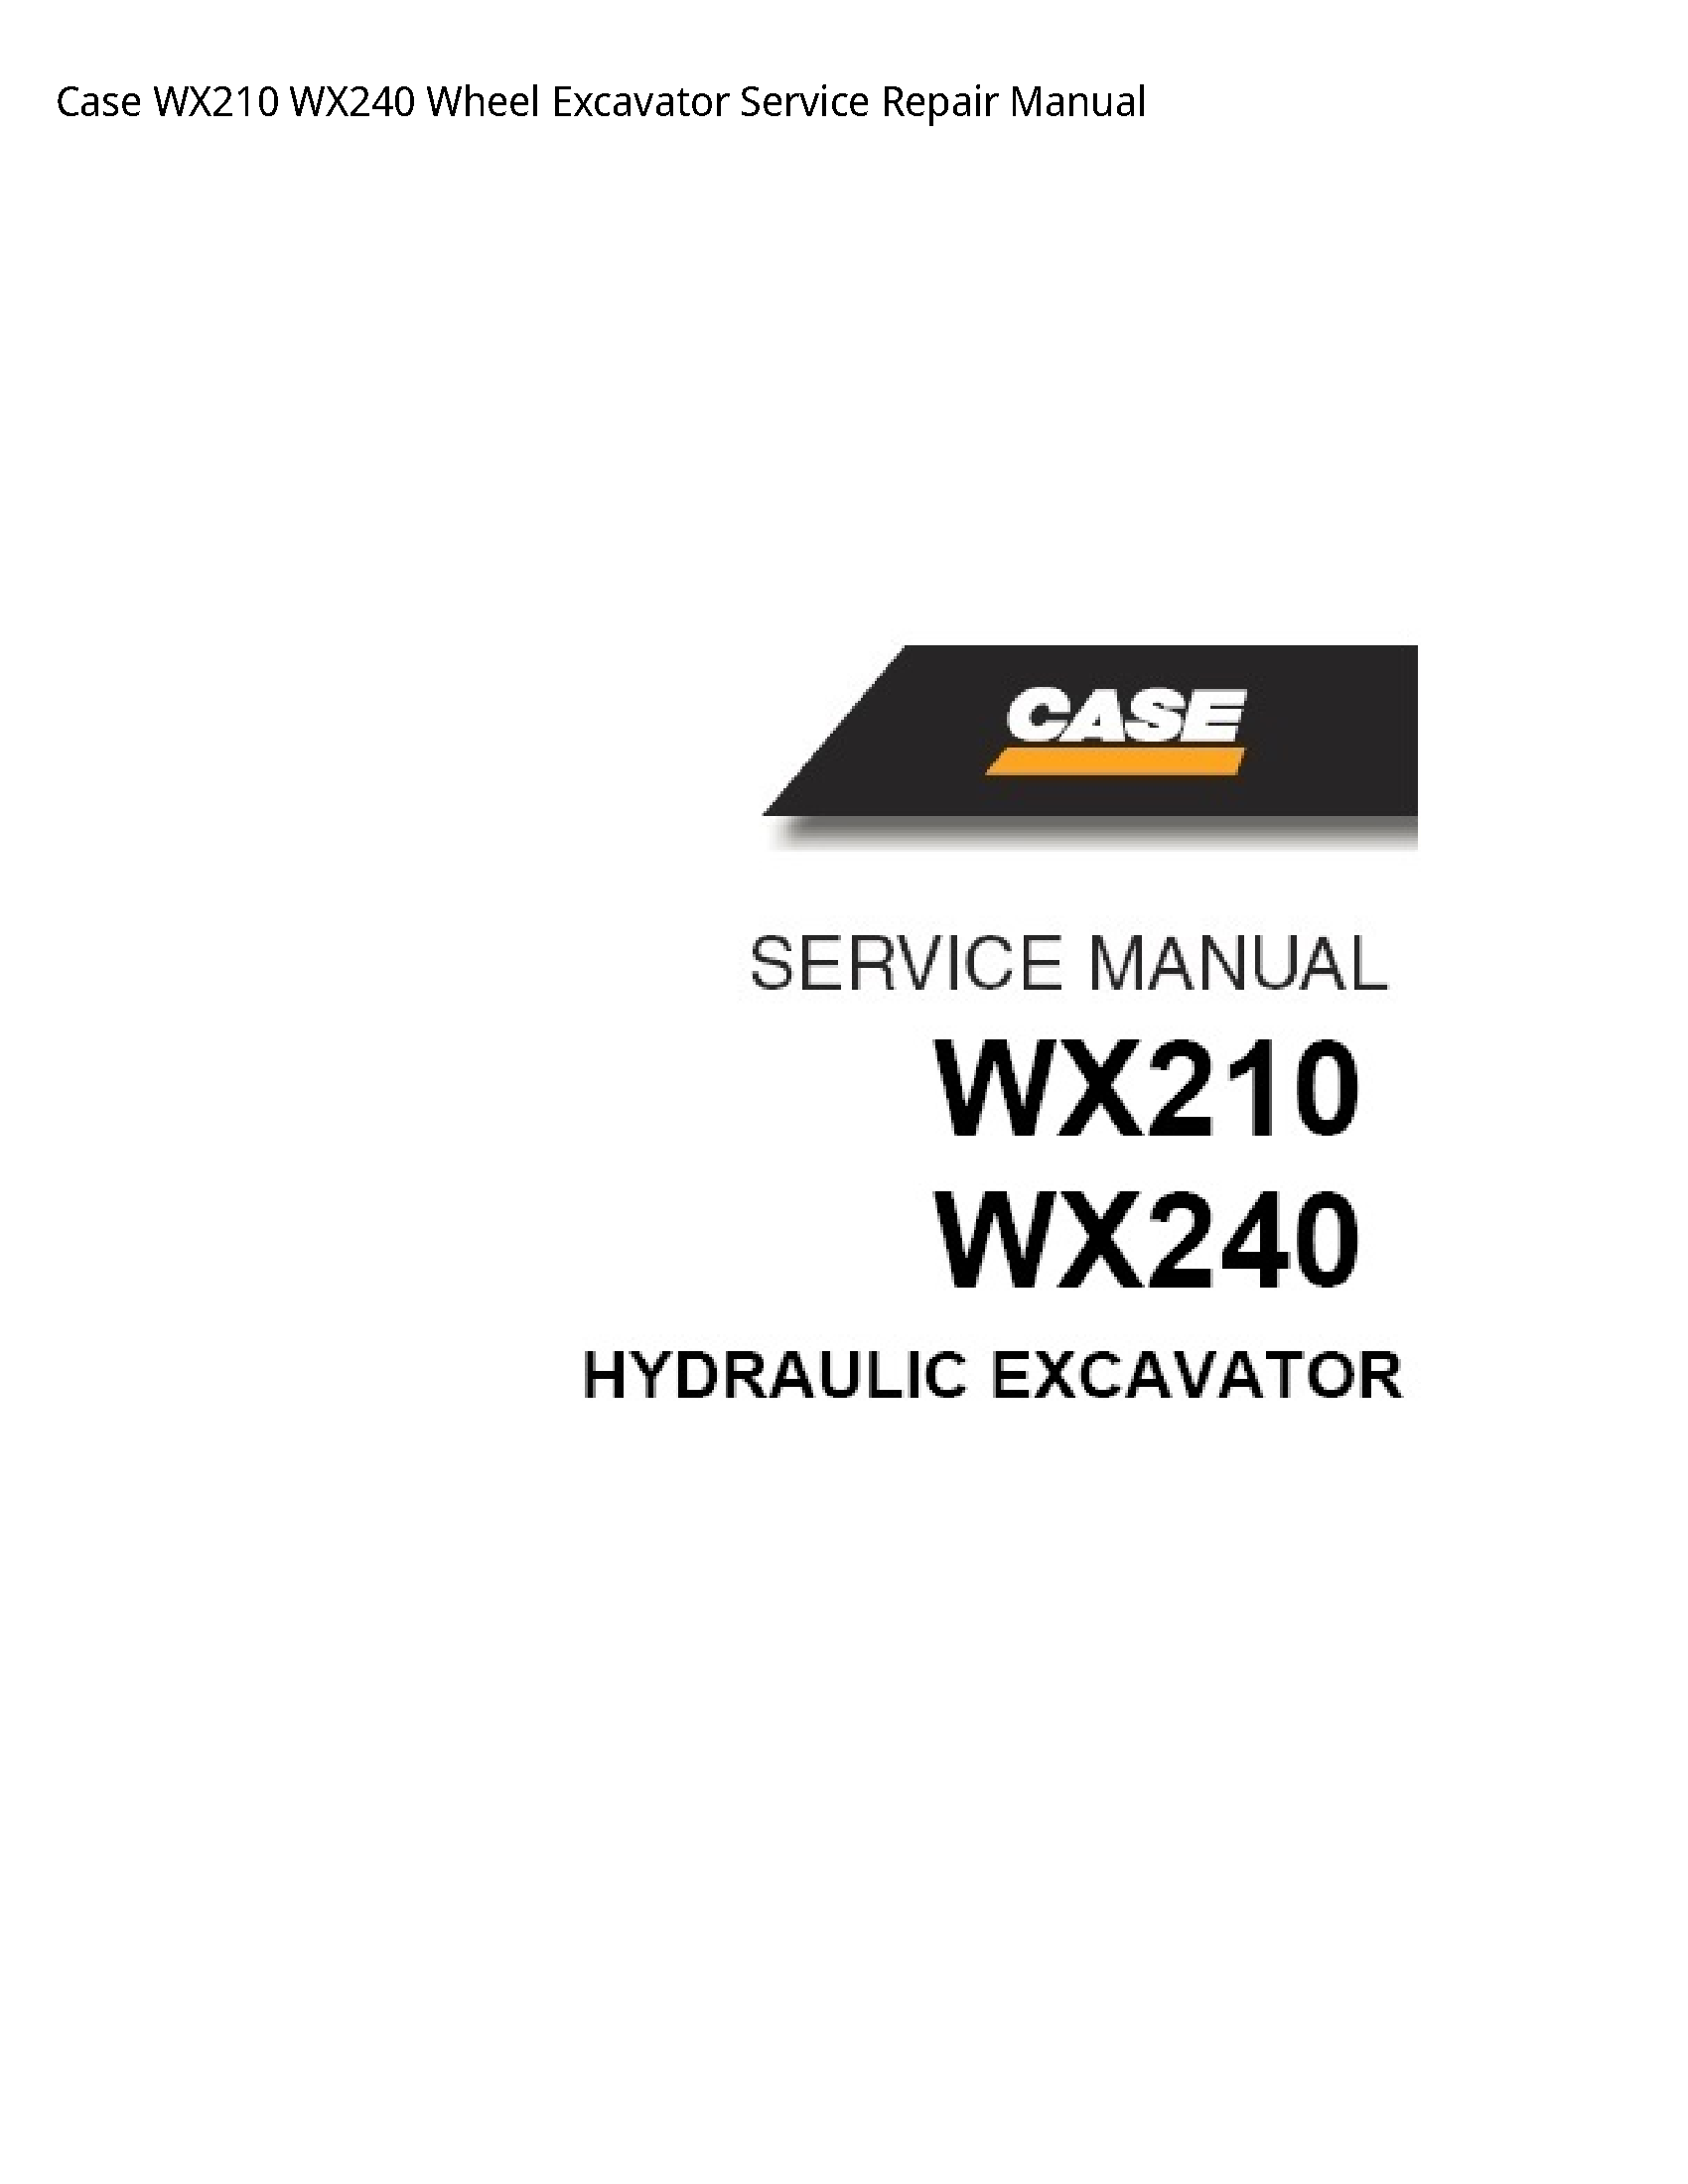 Case/Case IH WX210 Wheel Excavator manual